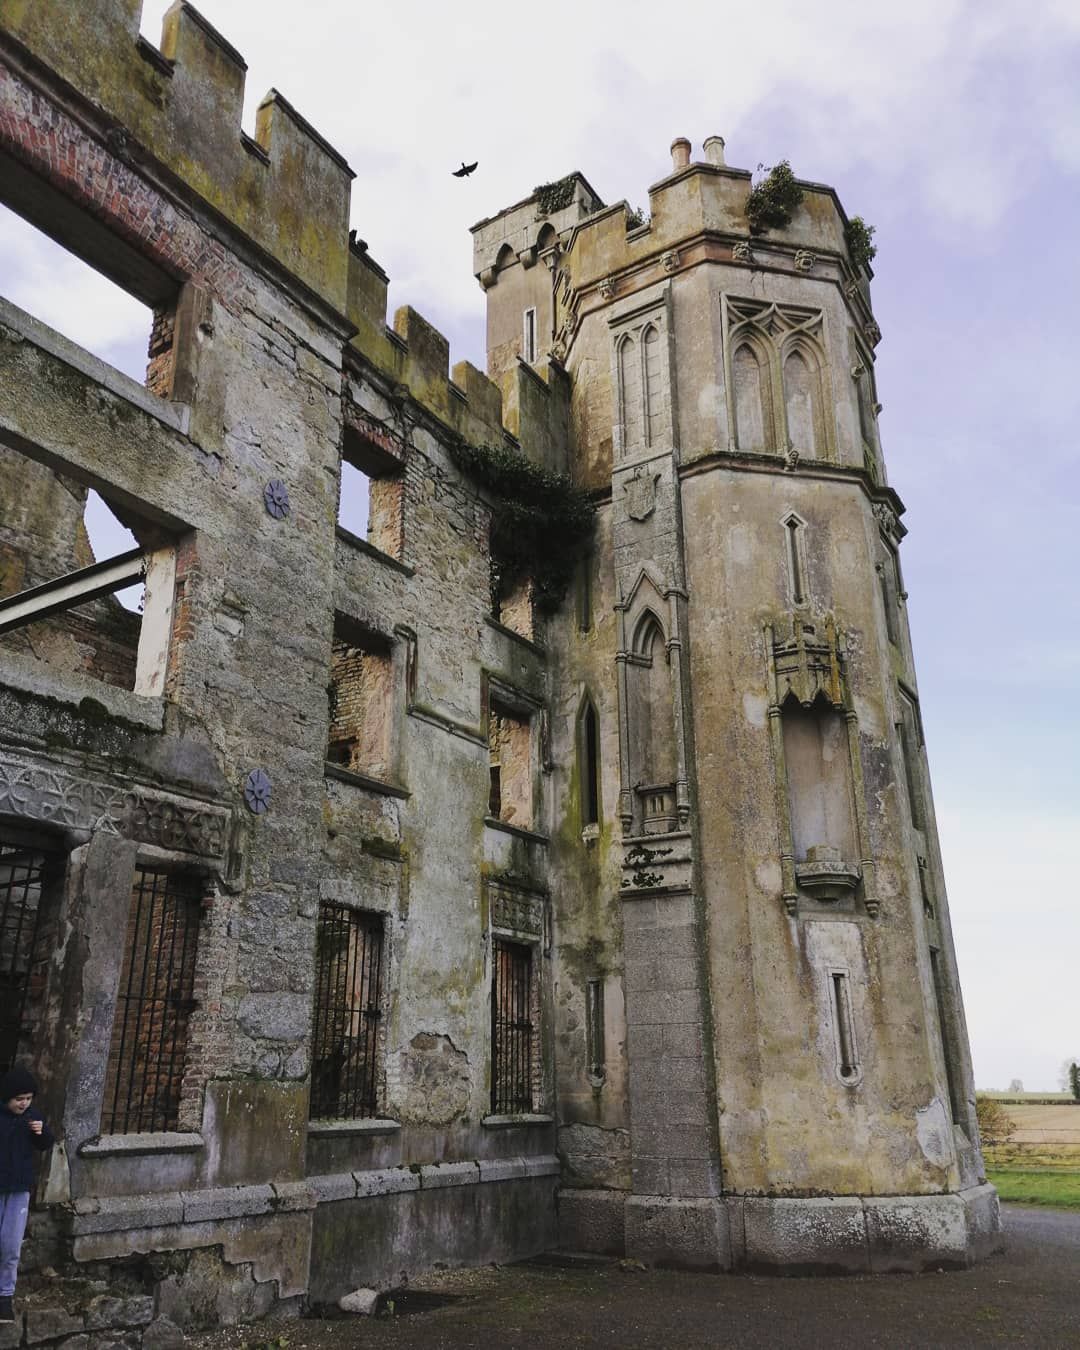 Old castle in Ireland